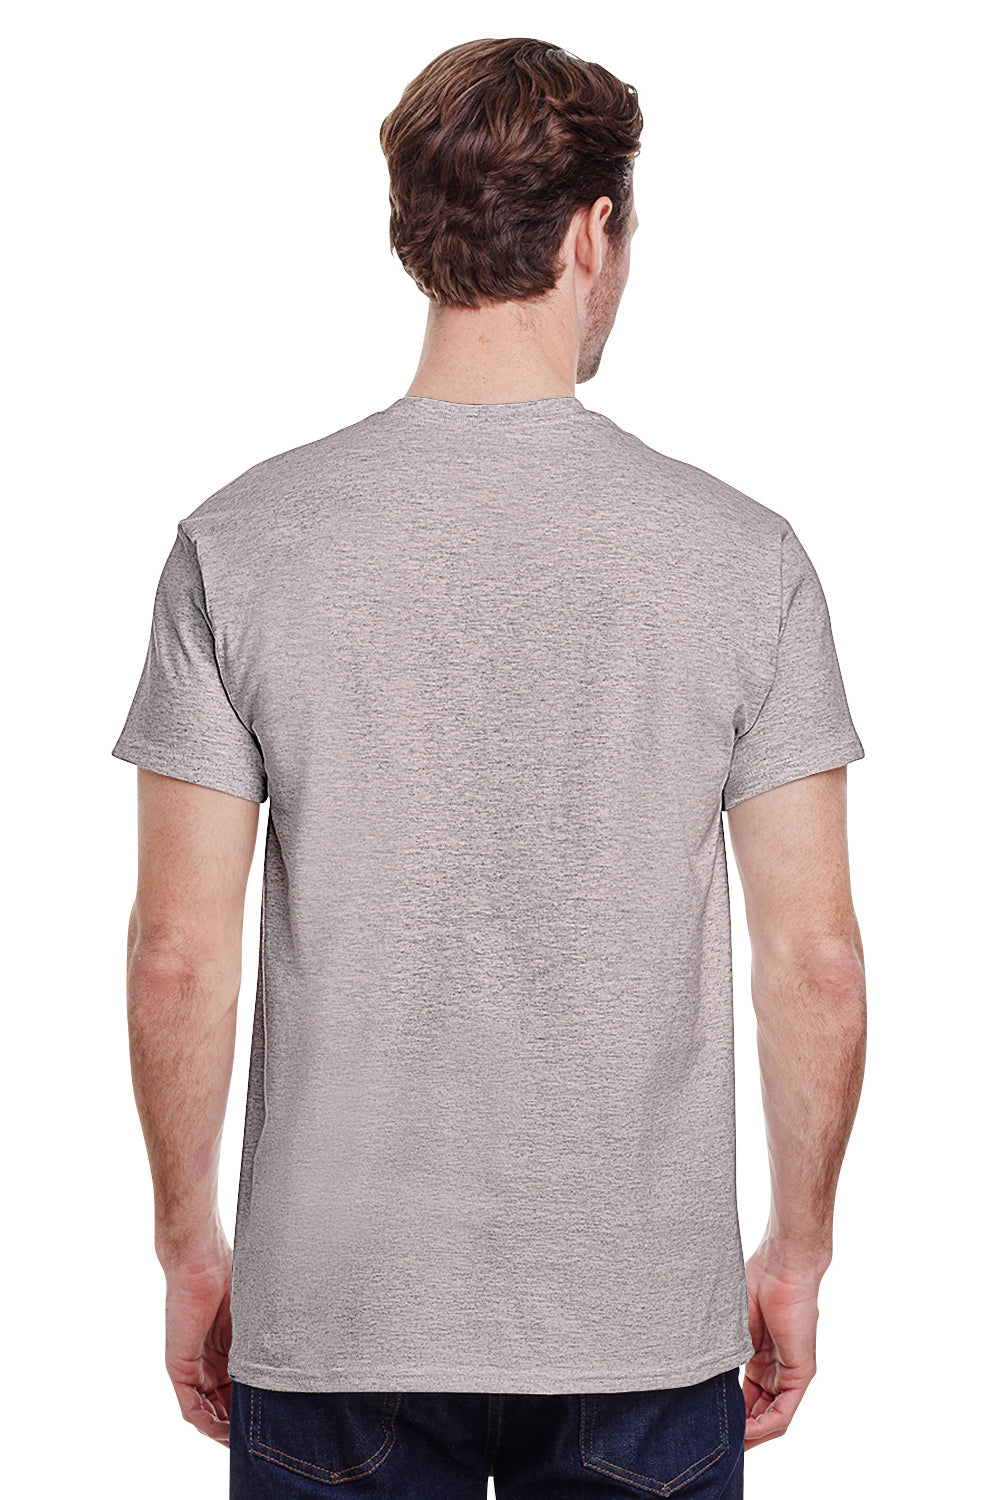 Gildan G500 Mens Short Sleeve Crewneck T-Shirt Ash Grey Back